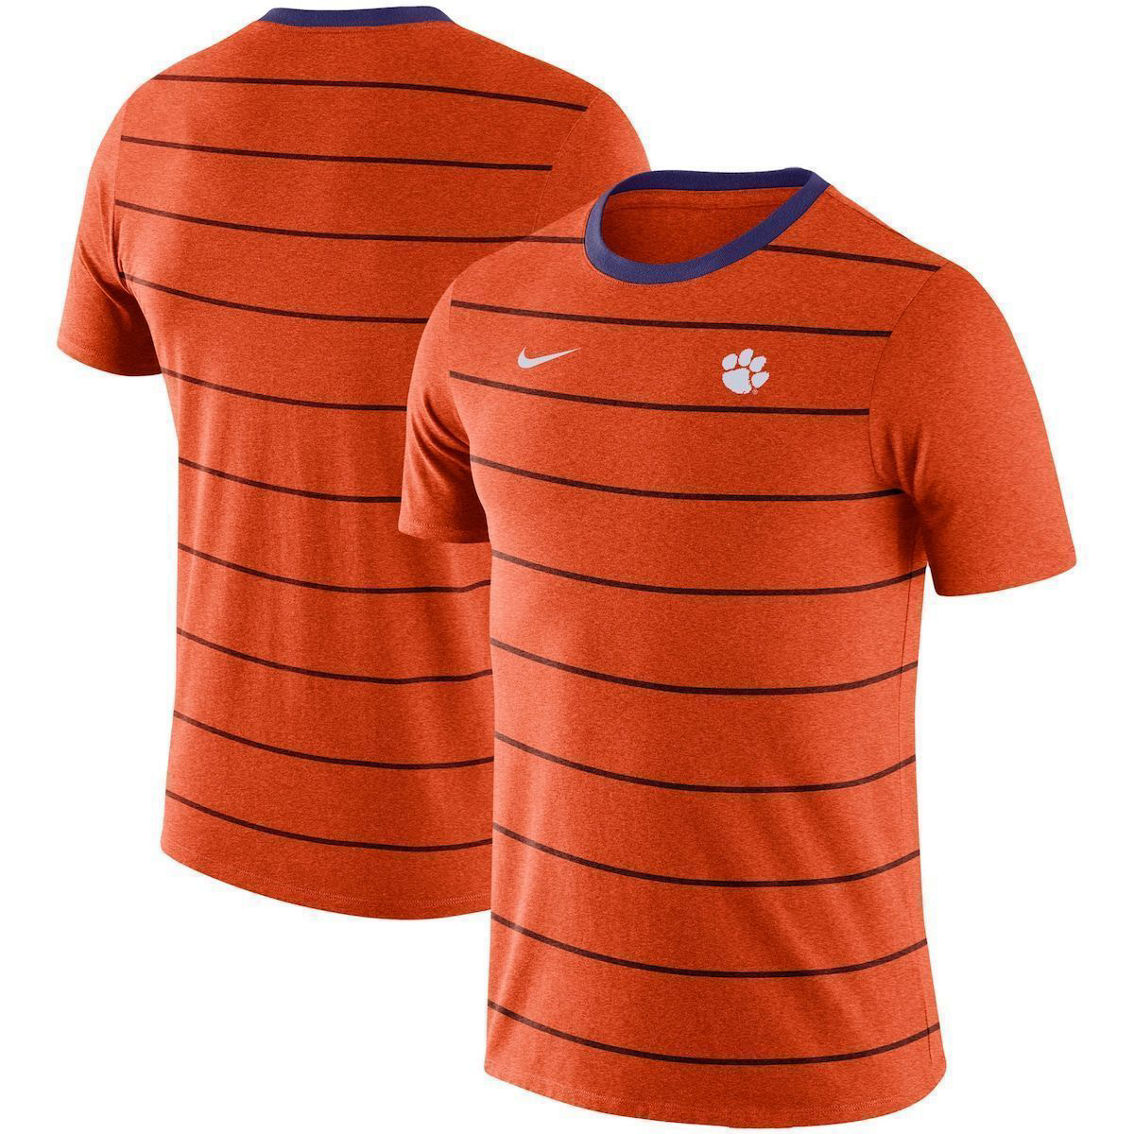 Men's Nike Orange Clemson Tigers Inspired Tri-Blend T-Shirt - Image 1 of 4